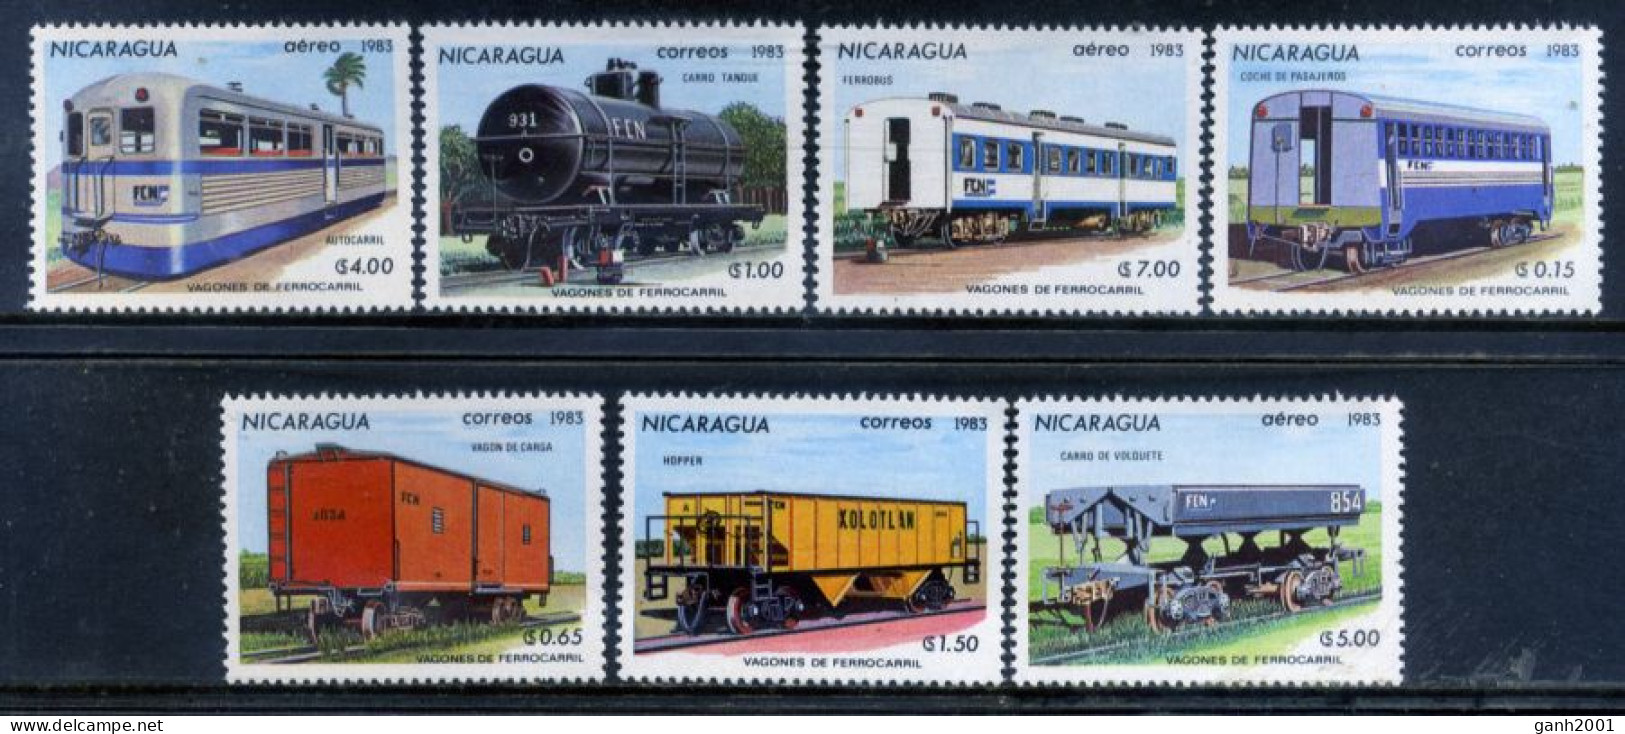 Nicaragua 1983 / Trains Railways Wagons MNH Trenes FFCC Züge / Gs40  38-46 - Trains